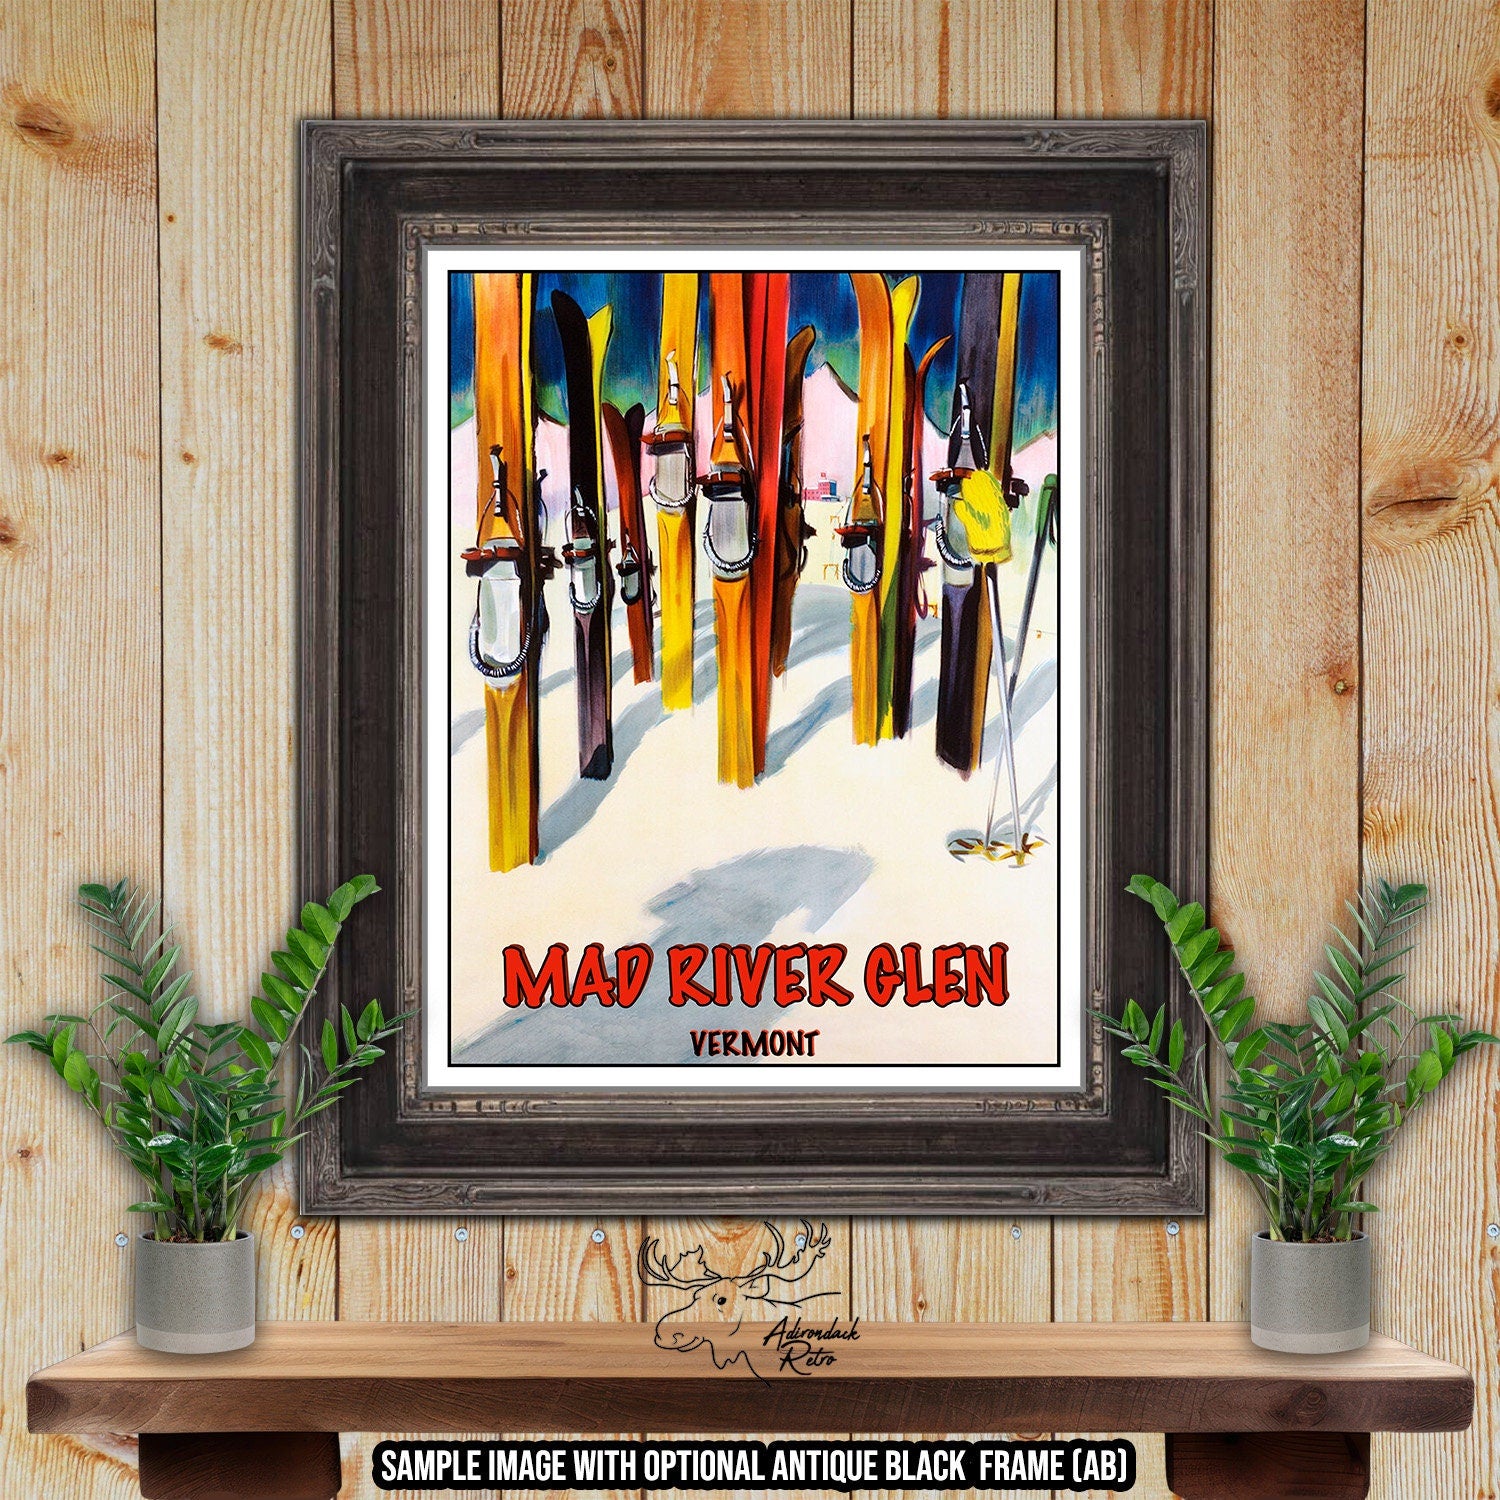 Mad River Glen Vermont Retro Ski Resort Poster at Adirondack Retro